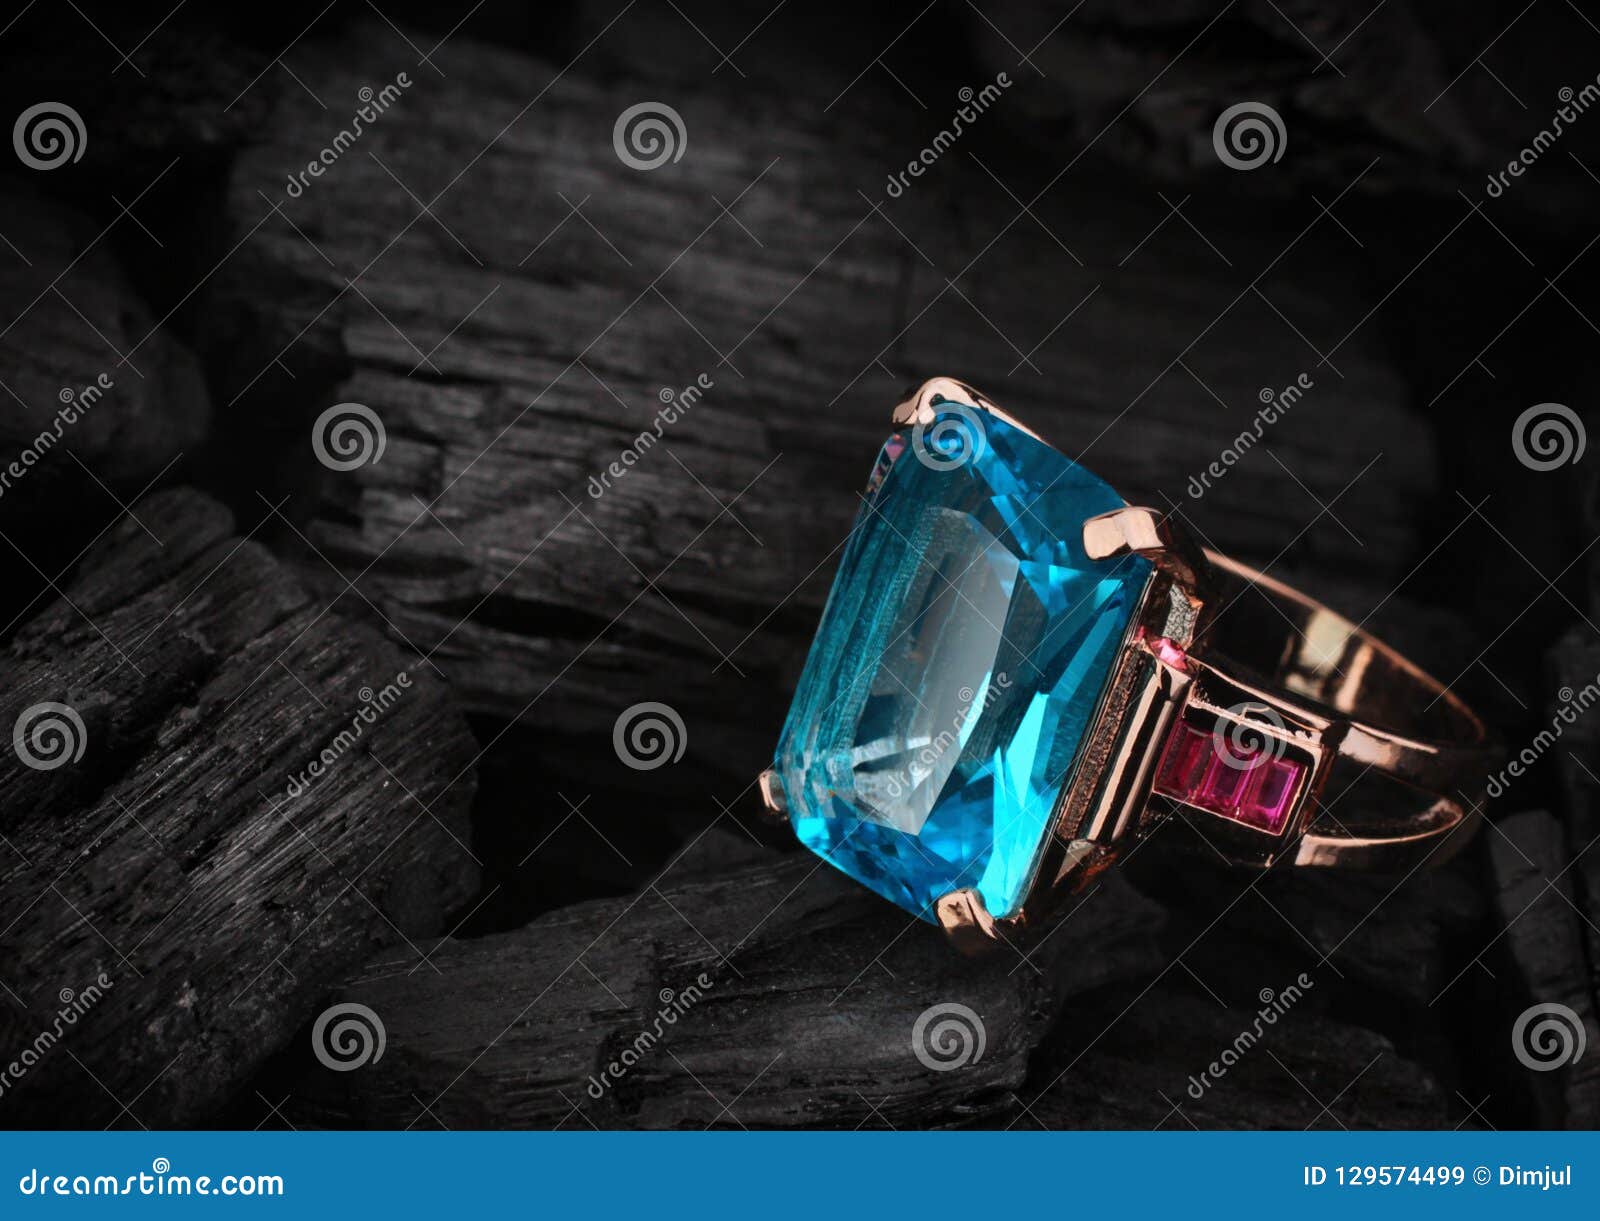 jewelery ring with aquamarine gemstone on dark coal background,